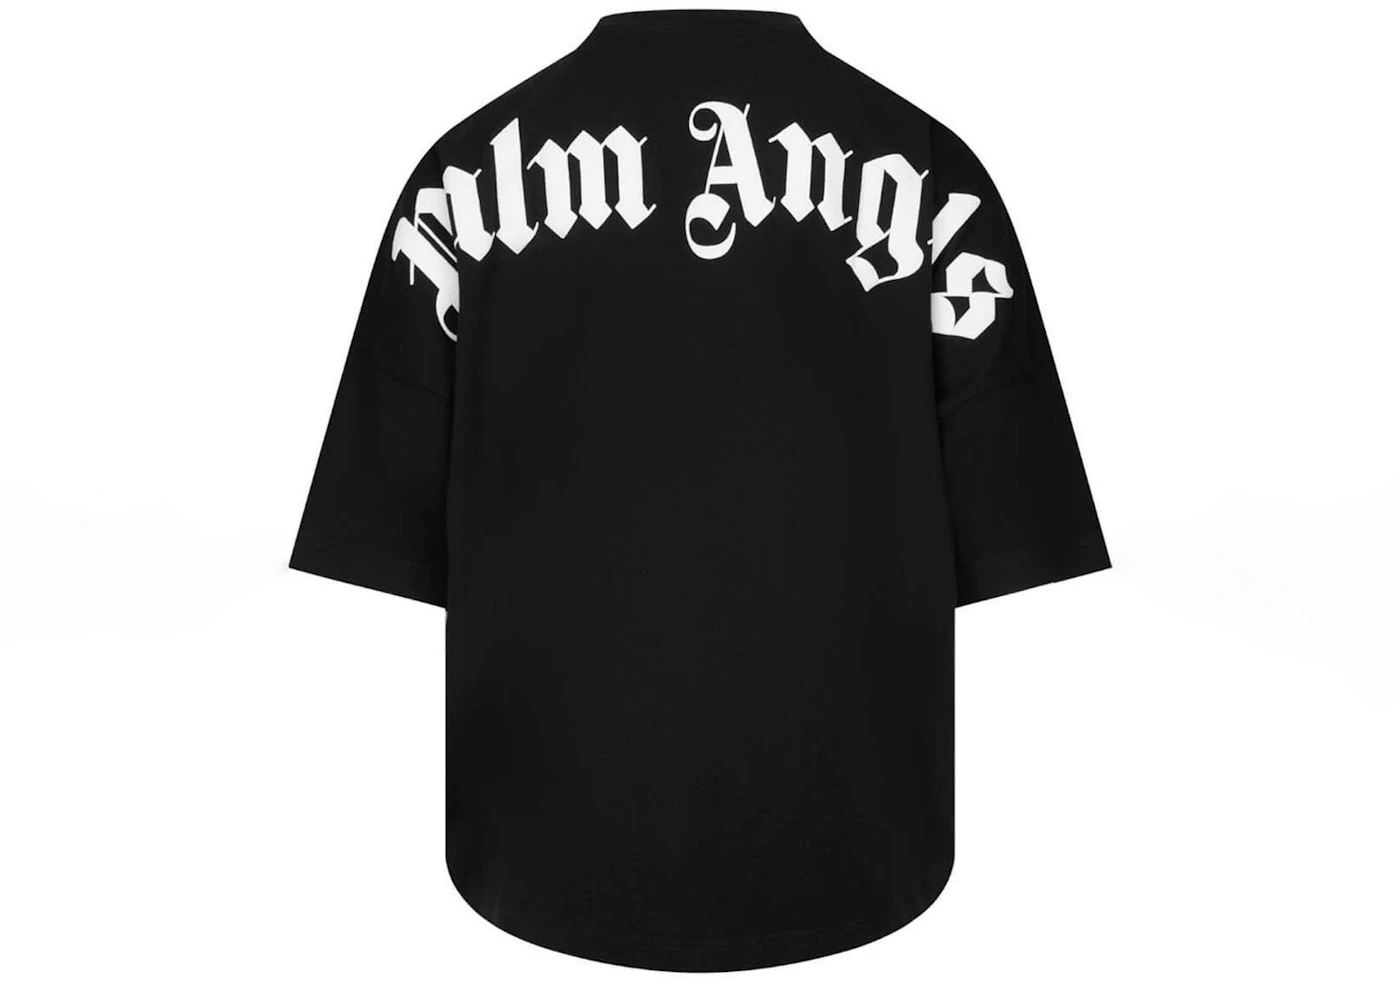 https://images.stockx.com/images/Palm-Angels-Classic-Logo-Print-T-Shirt-Black.jpg?fit=fill&bg=FFFFFF&w=700&h=500&fm=webp&auto=compress&q=90&dpr=2&trim=color&updated_at=1619648394